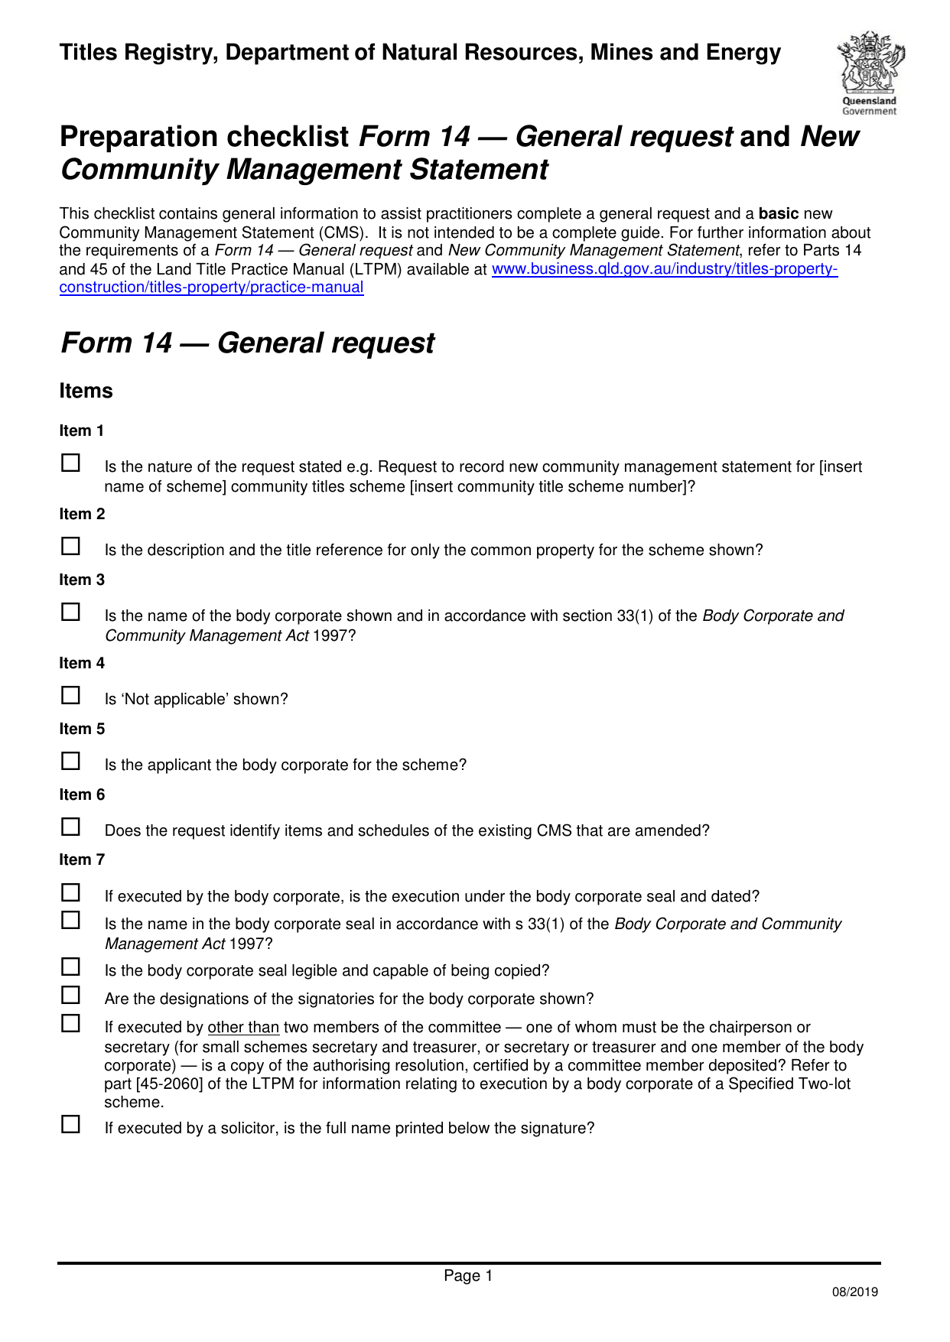 Form 14 Preparation Checklist - General Request and New Community Management Statement - Queensland, Australia, Page 1